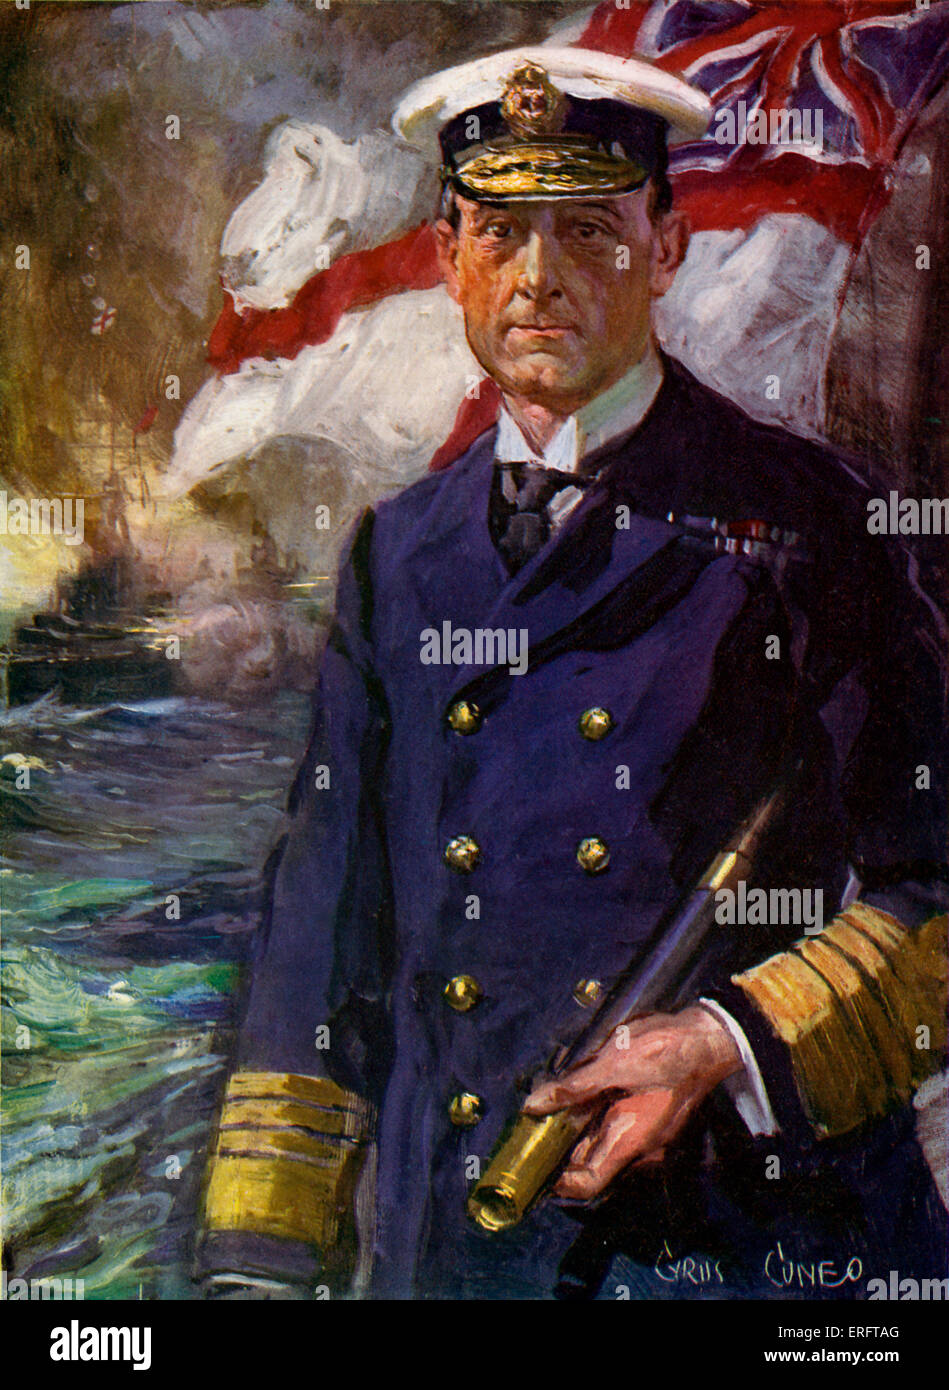 Admiral Sir John Jellicoe - . British Royal Navy Admiral; Admiral of the Fleet during Worl War I. 5 December 1859 – 20 November 1935. (artist Cyrus Cuneo) Stock Photo